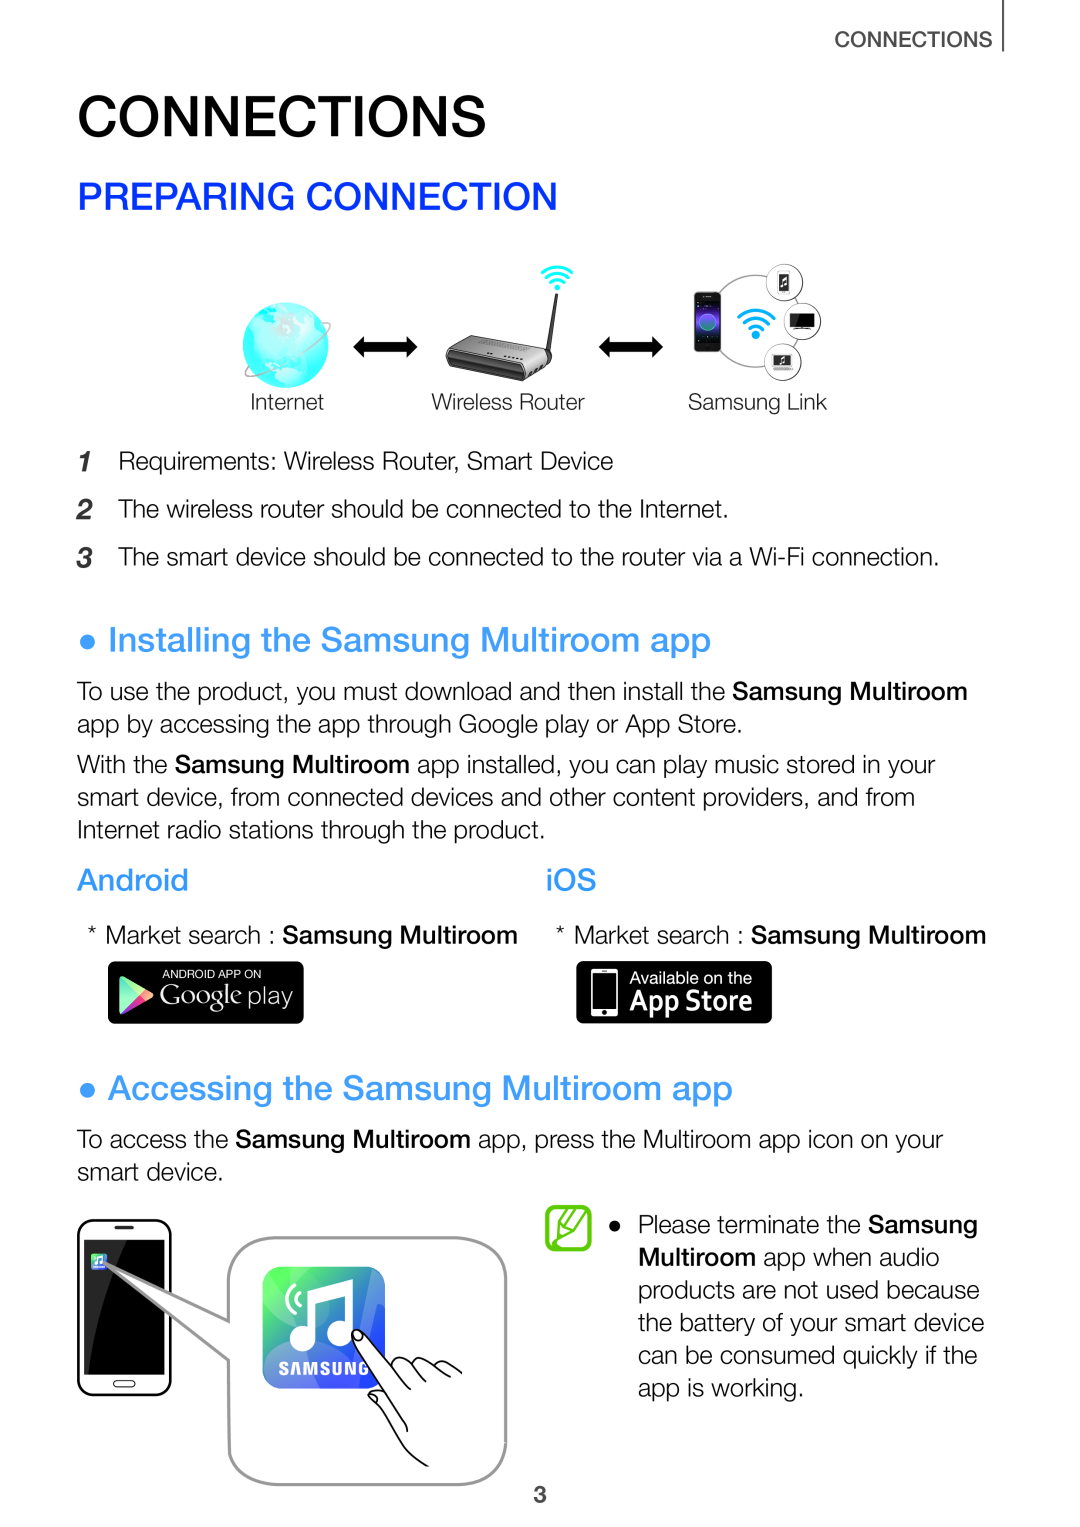 Samsung HW-J6500/EN, HW-J7500/EN manual Connections, Preparing Connection, Installing the Samsung Multiroom app, AndroidiOS 